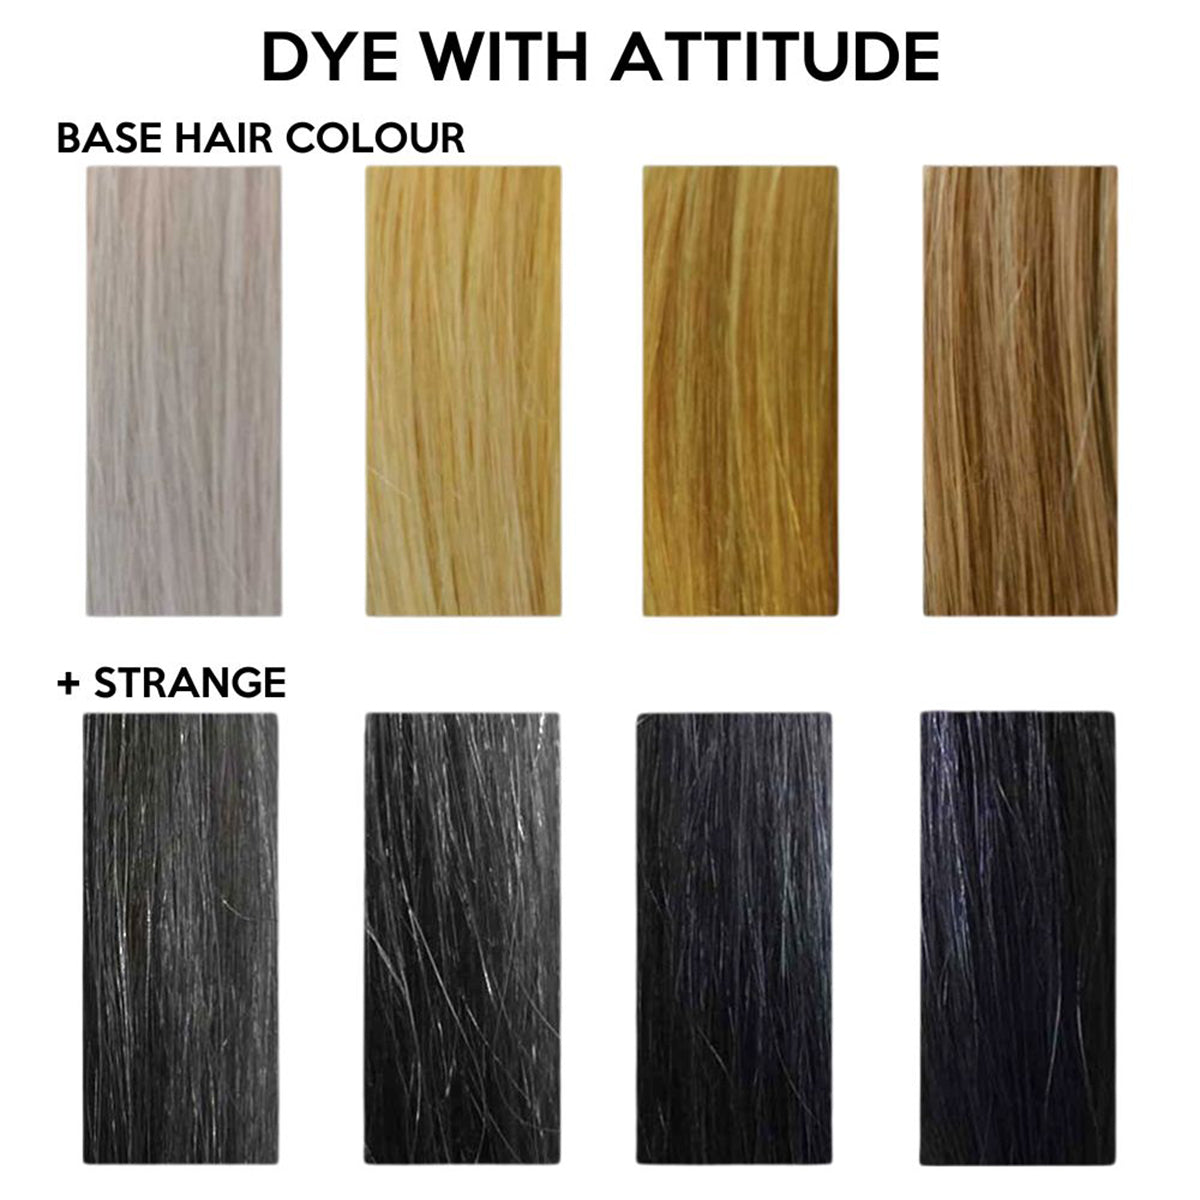 STRANGE GREY - Attitude Hair Dye - 135ml